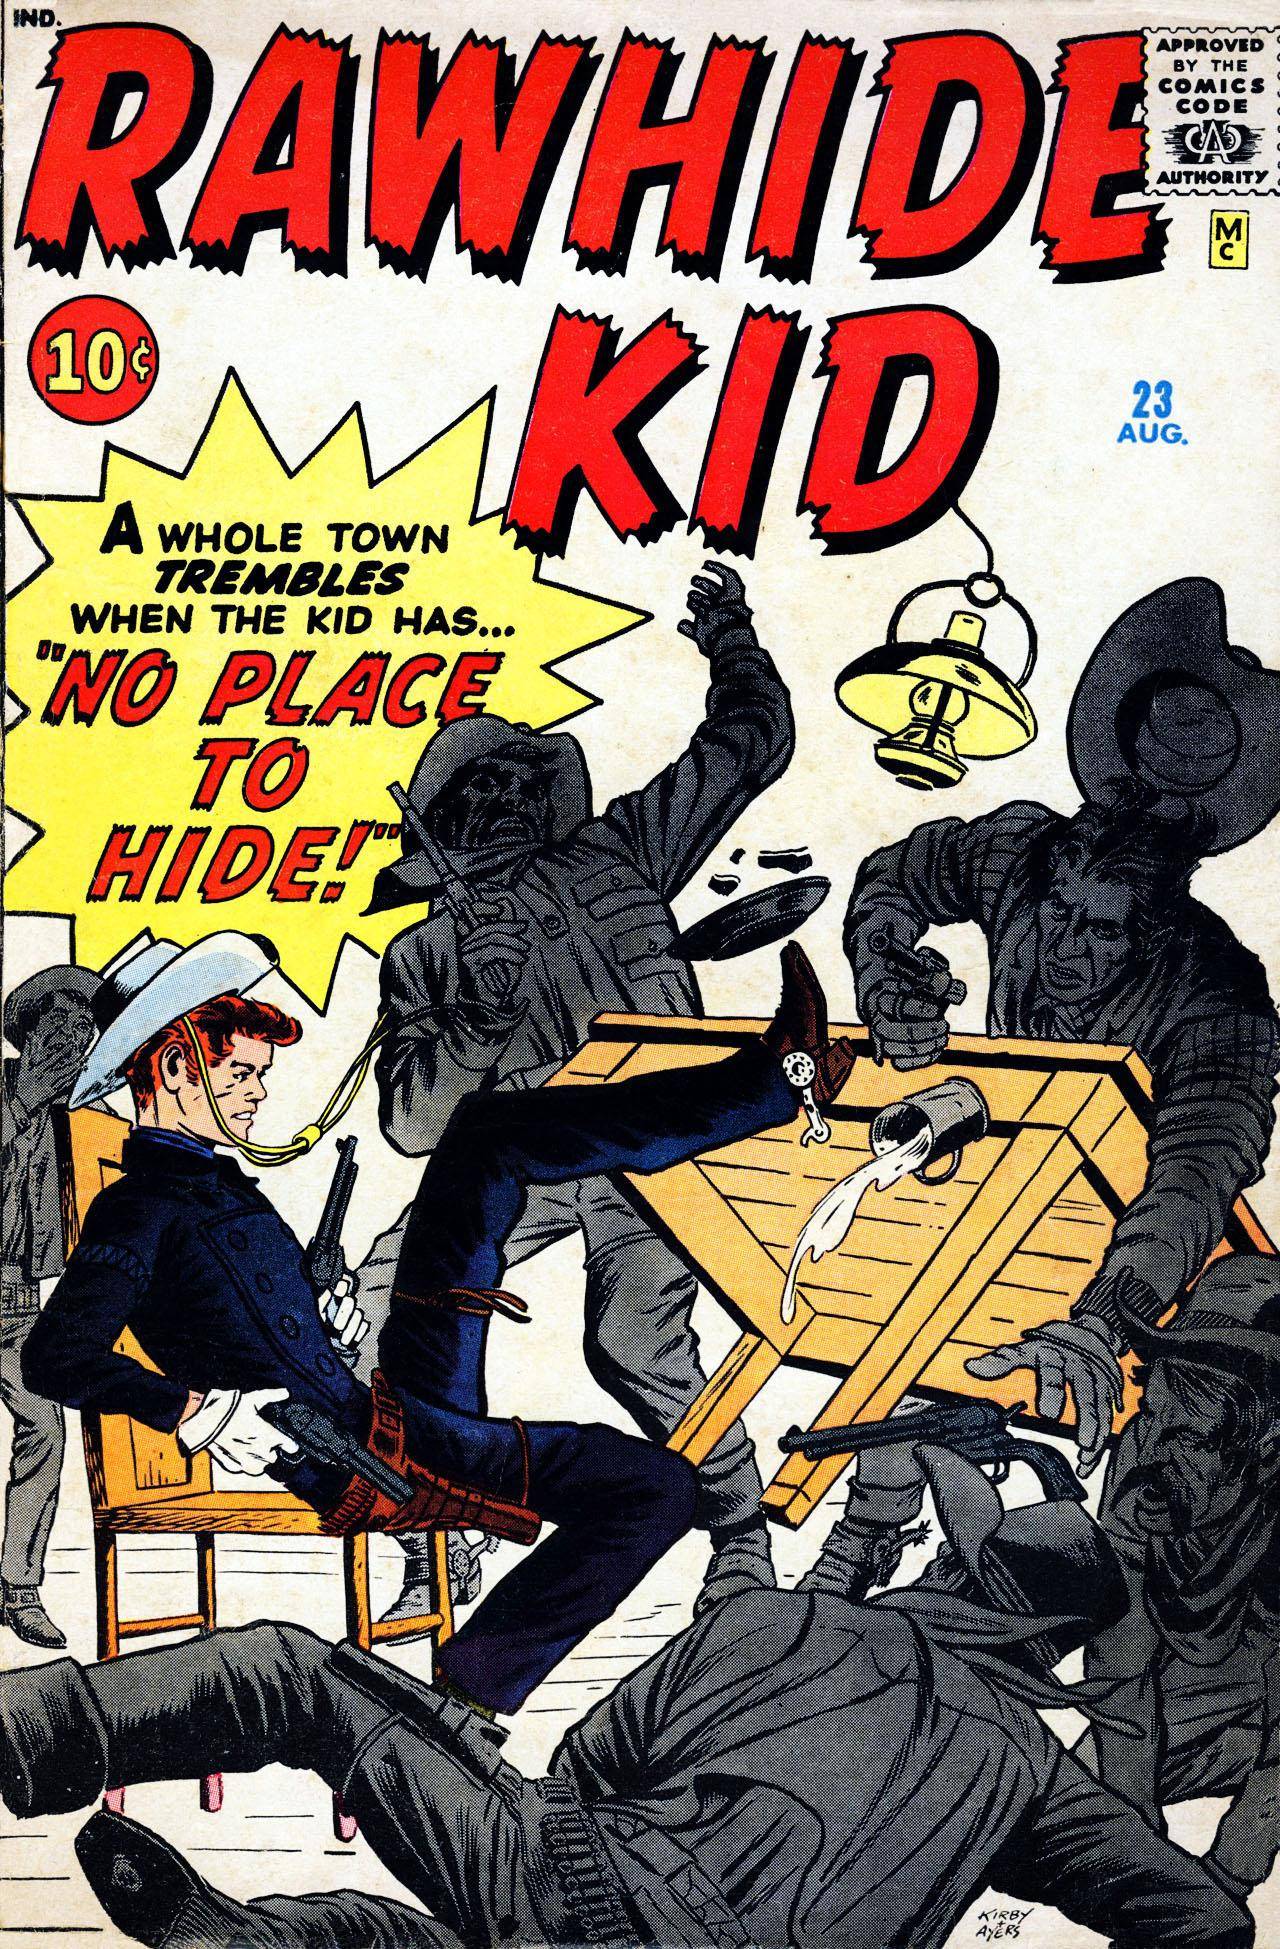 Rawhide Kid v1 023 1961 Gambit